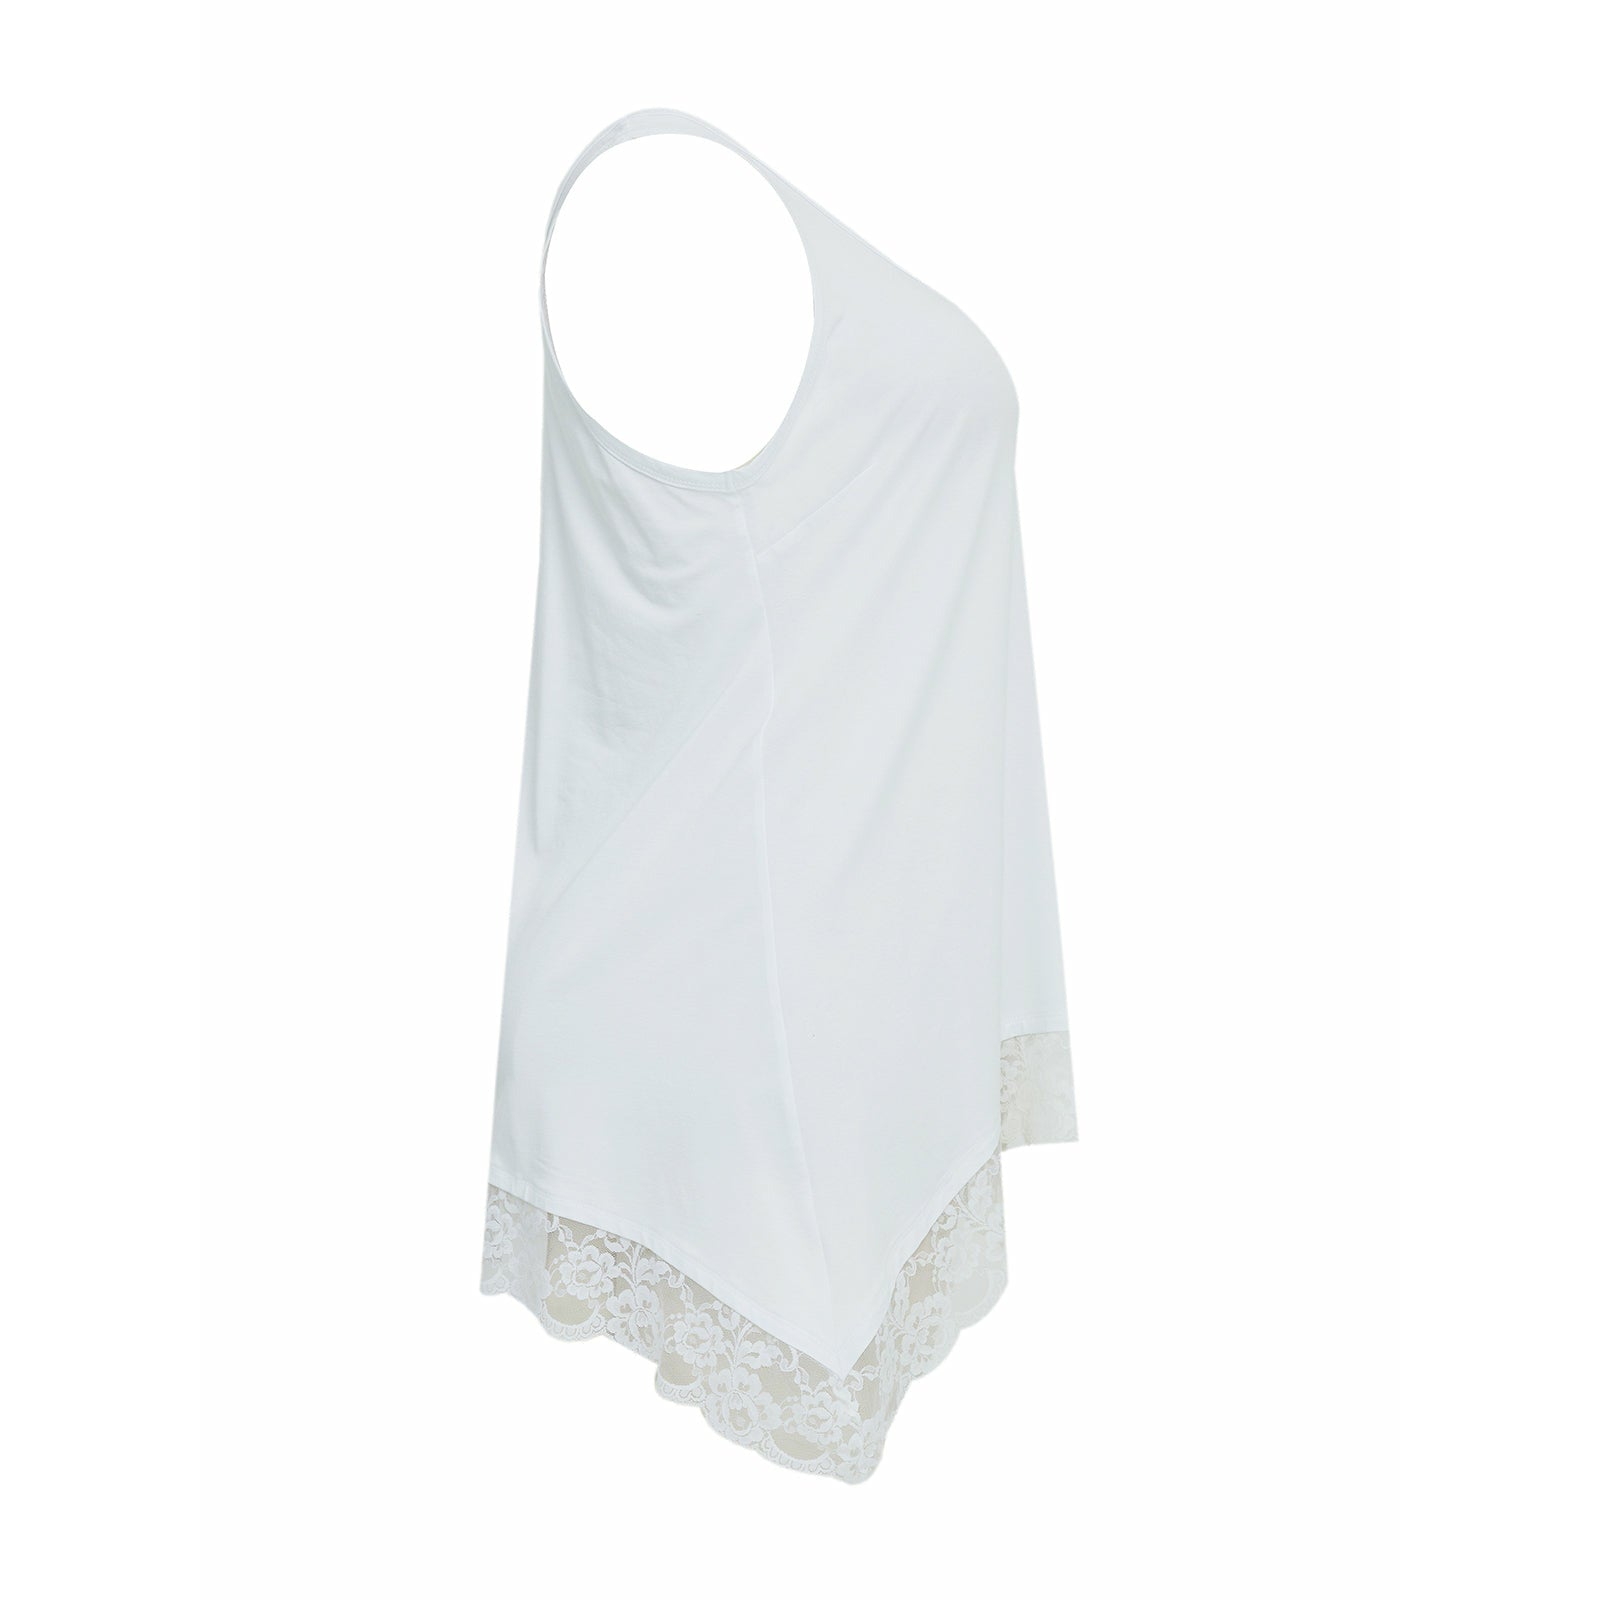 Mat Longline Lace Trim Vest in White - Wardrobe Plus